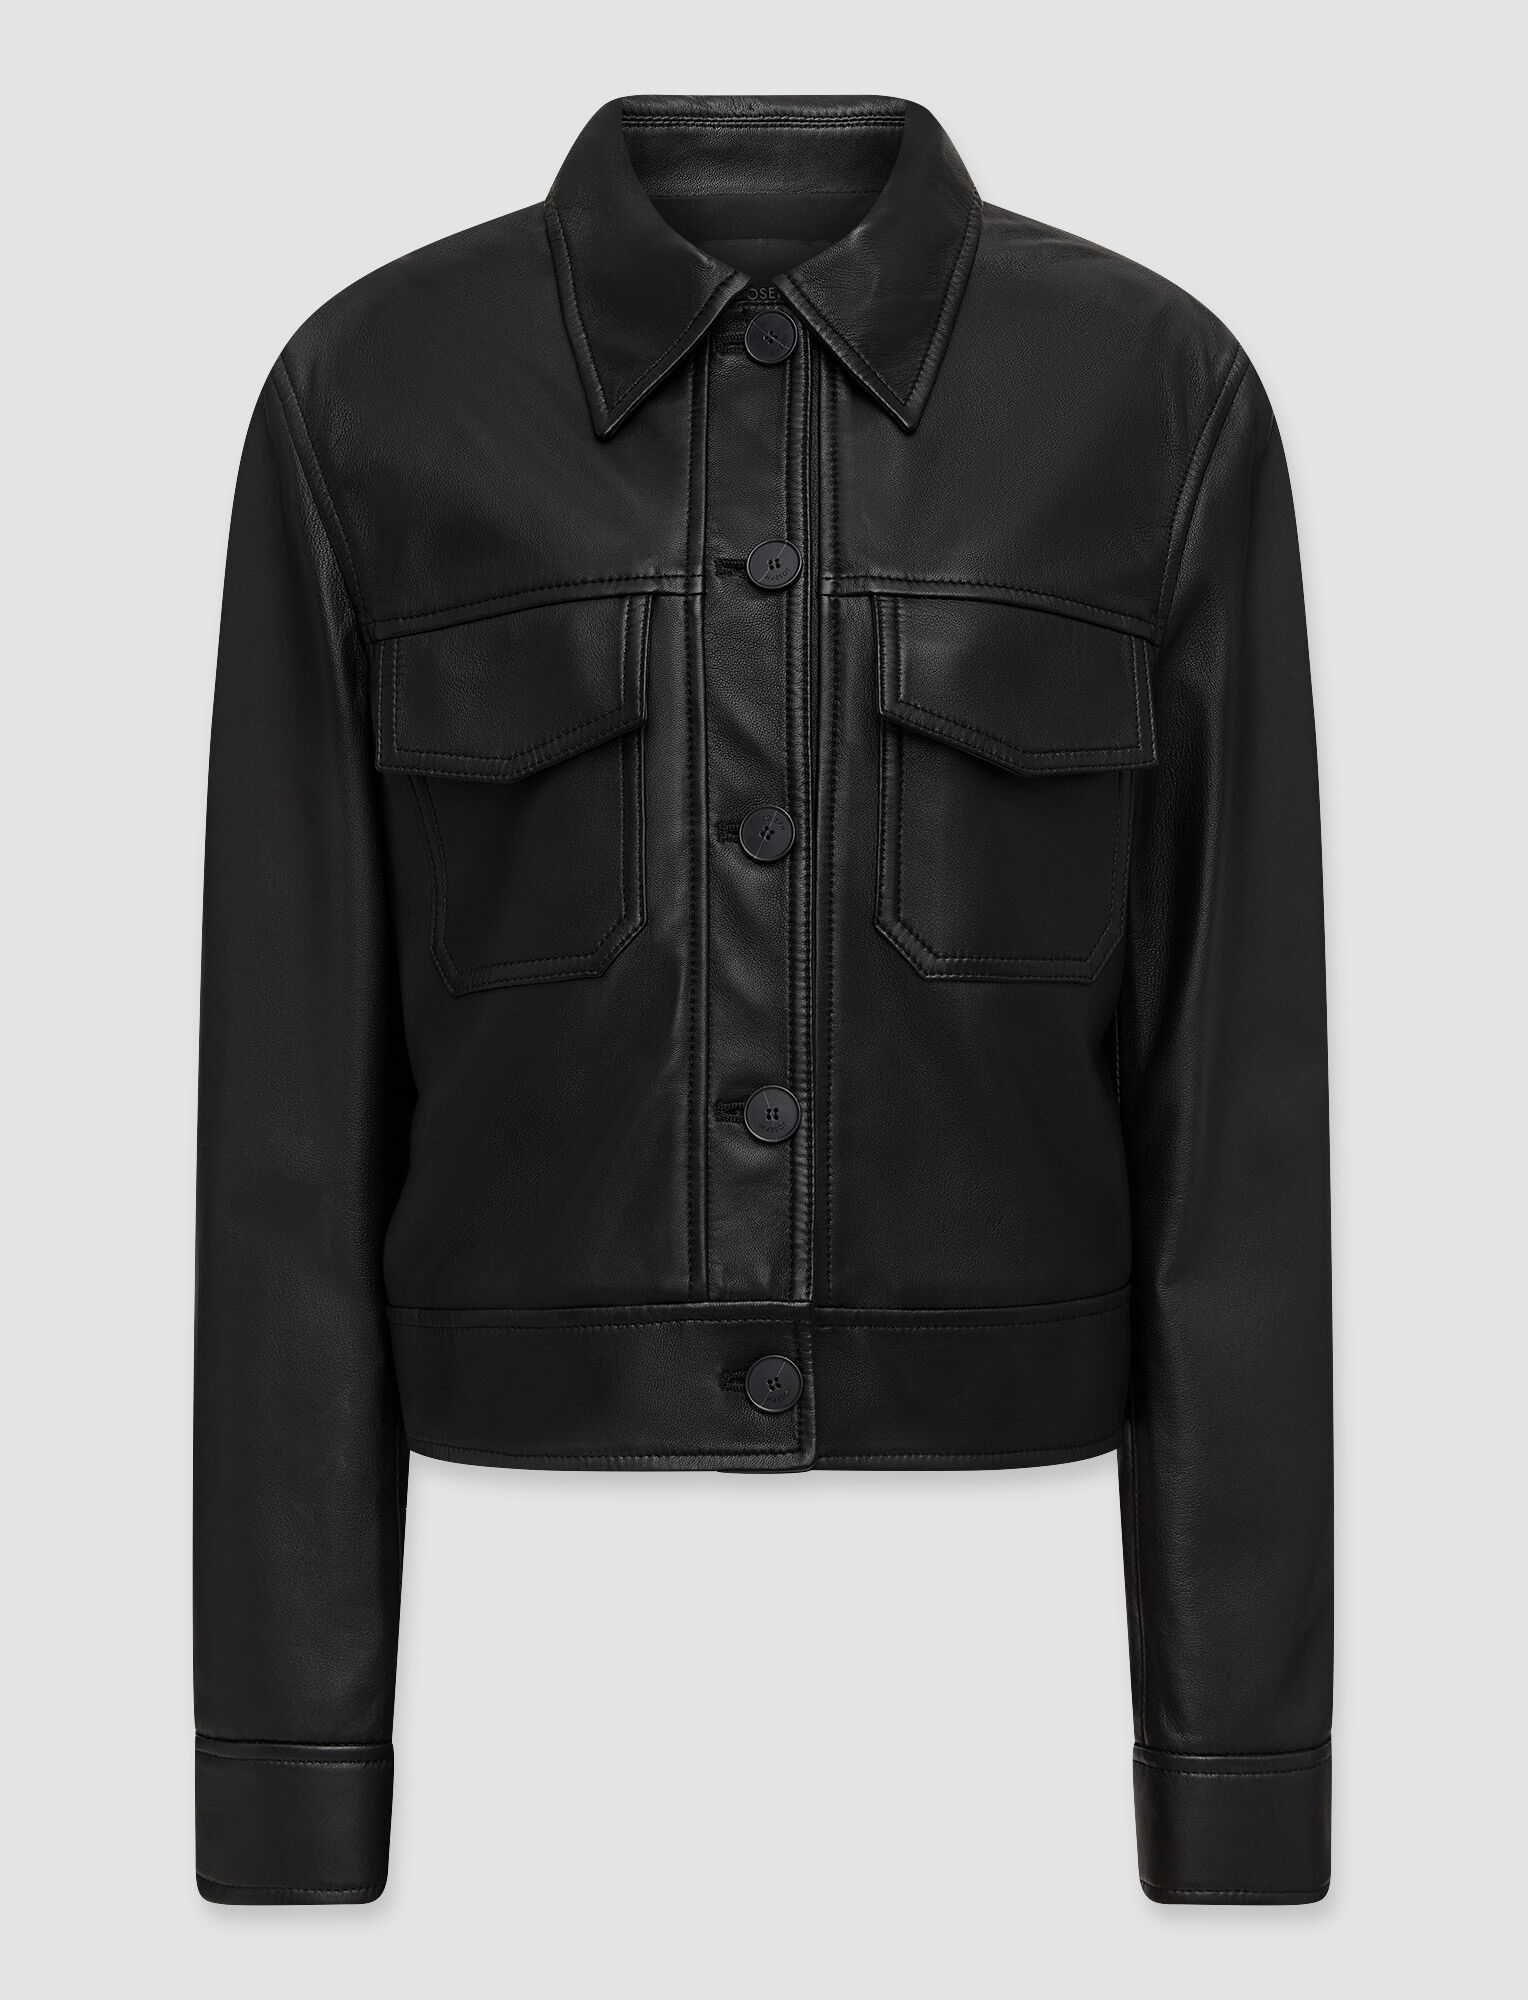 Joseph, Nappa Leather Granville Jacket, in Black